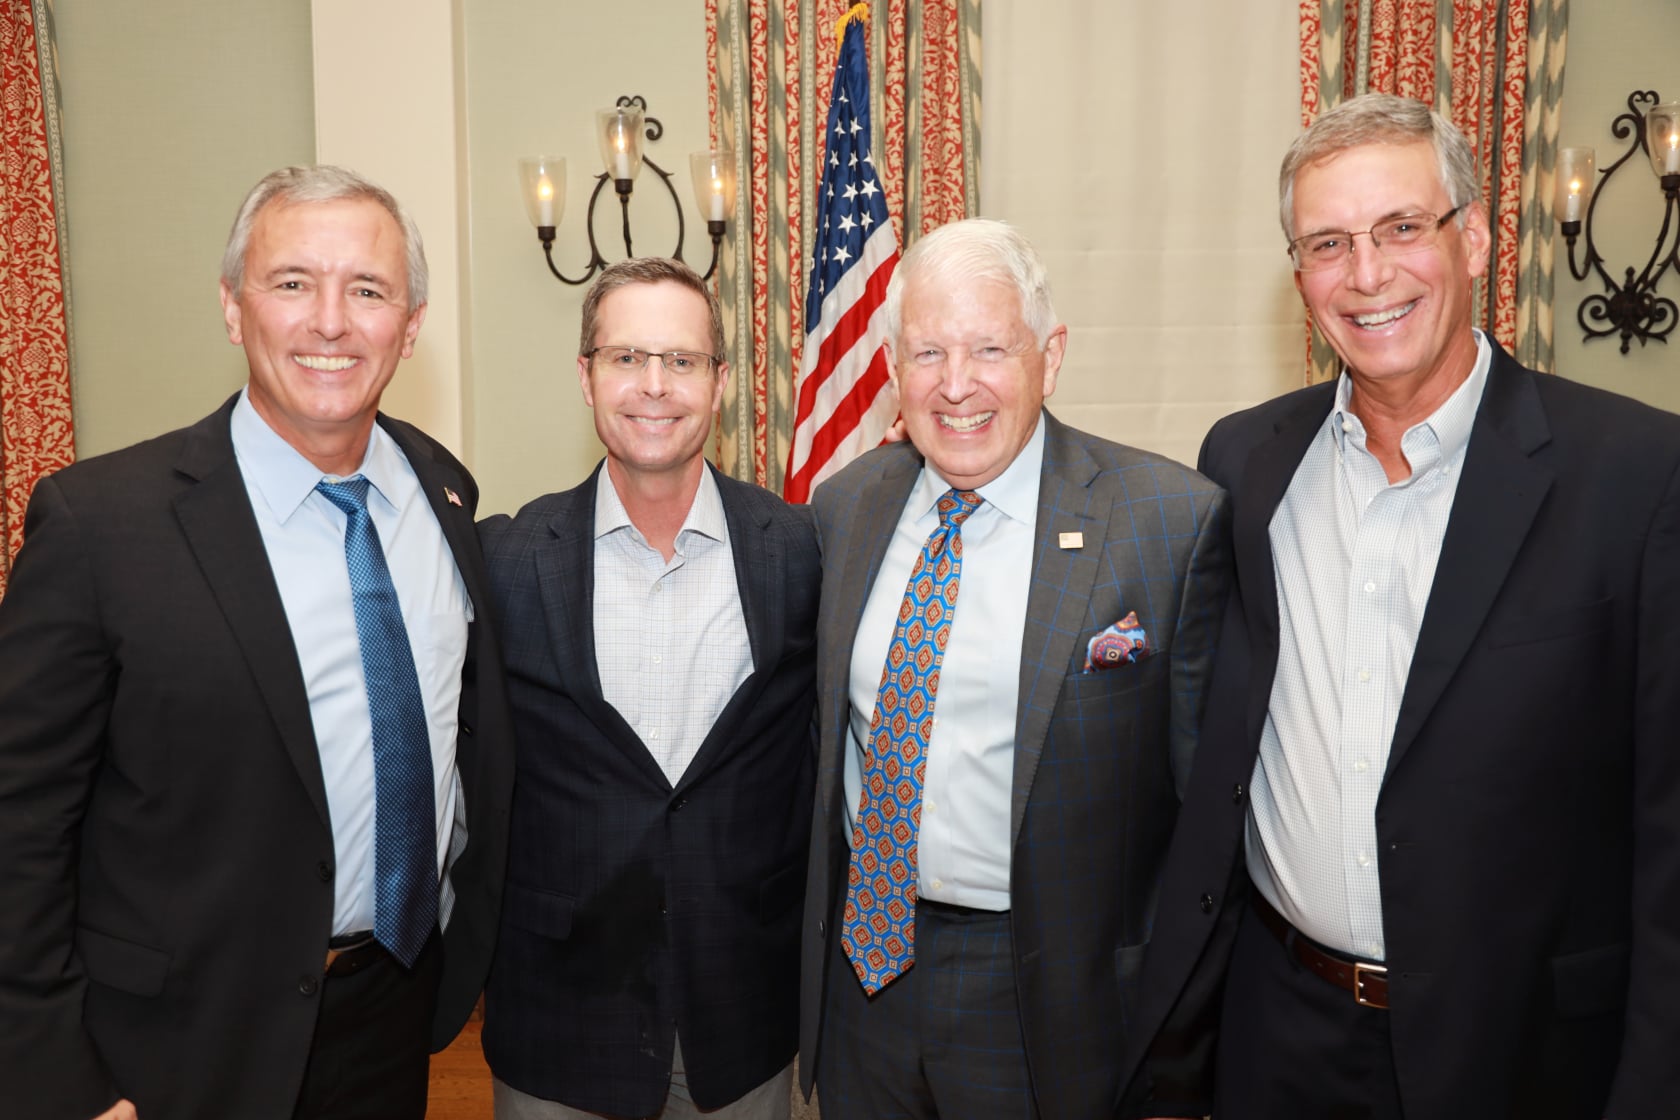 2021 Roosevelt Leadership Awards Presented to Rodney Davis, John Katko & Tom Rice